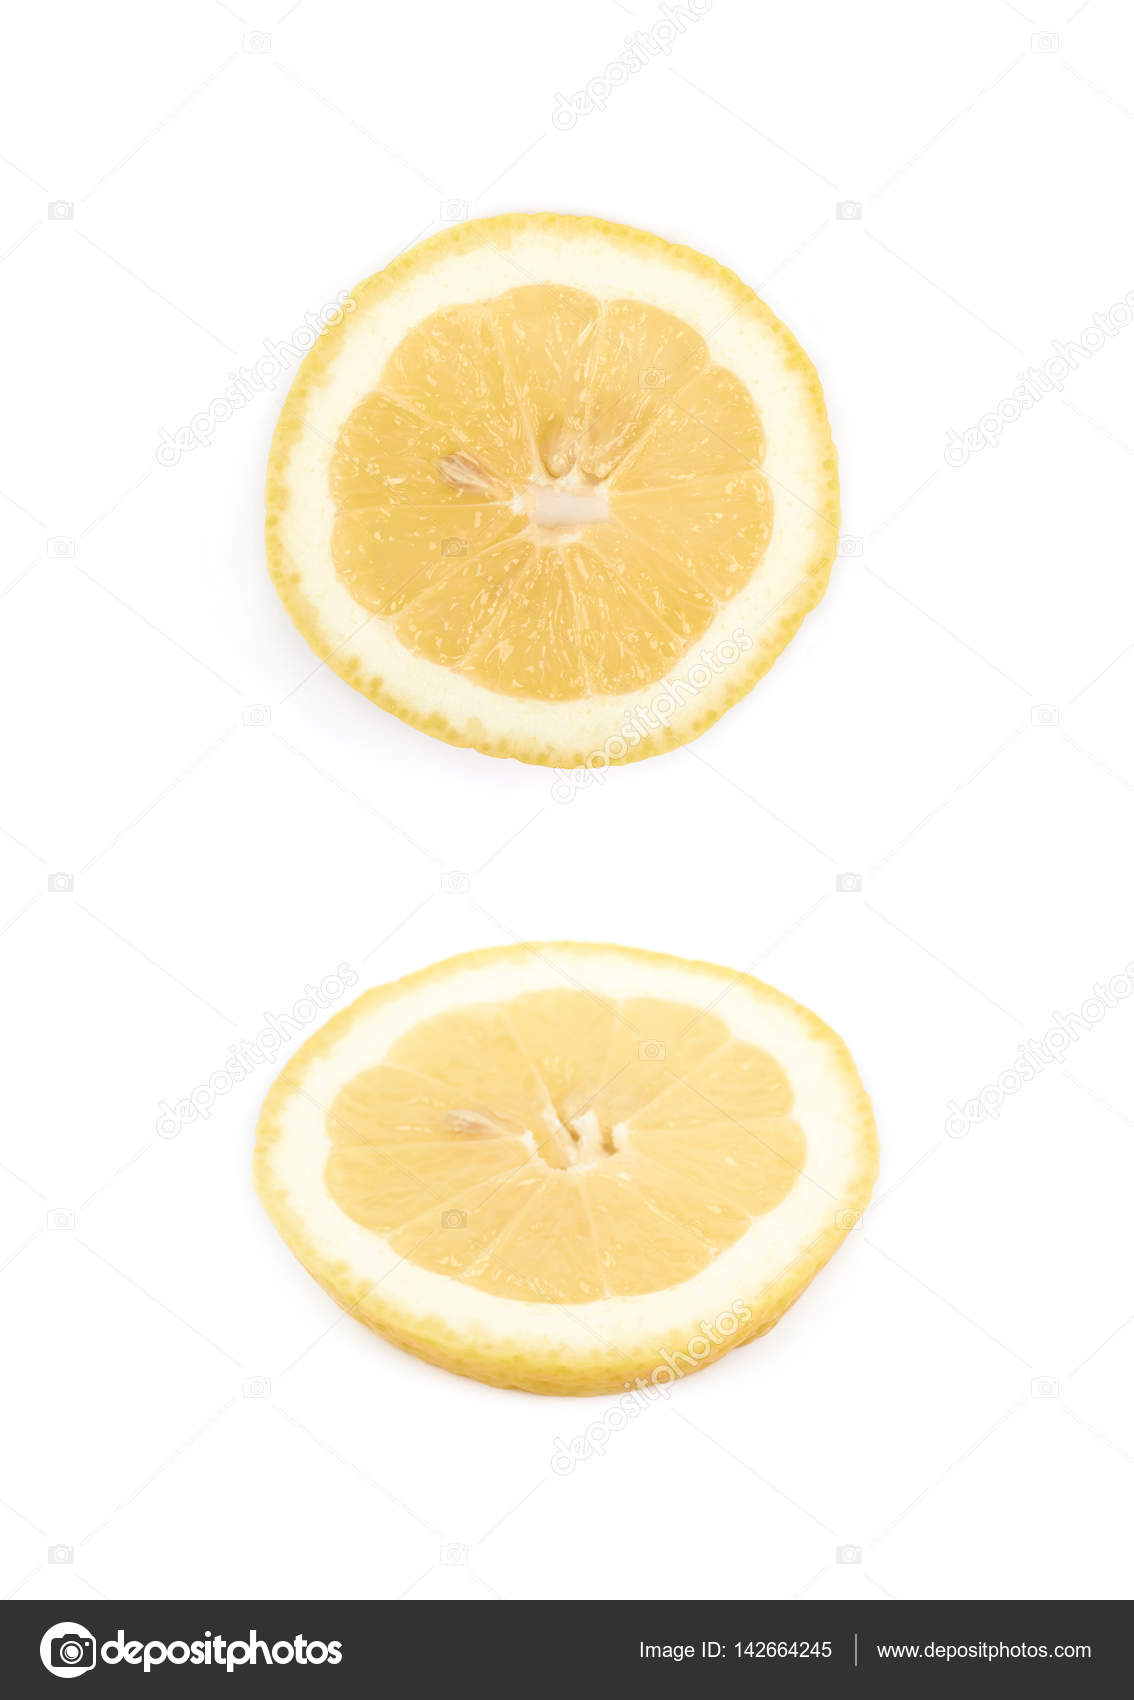 Single slice of a lemon isolated — Stock Photo © nbvf89 #142664245